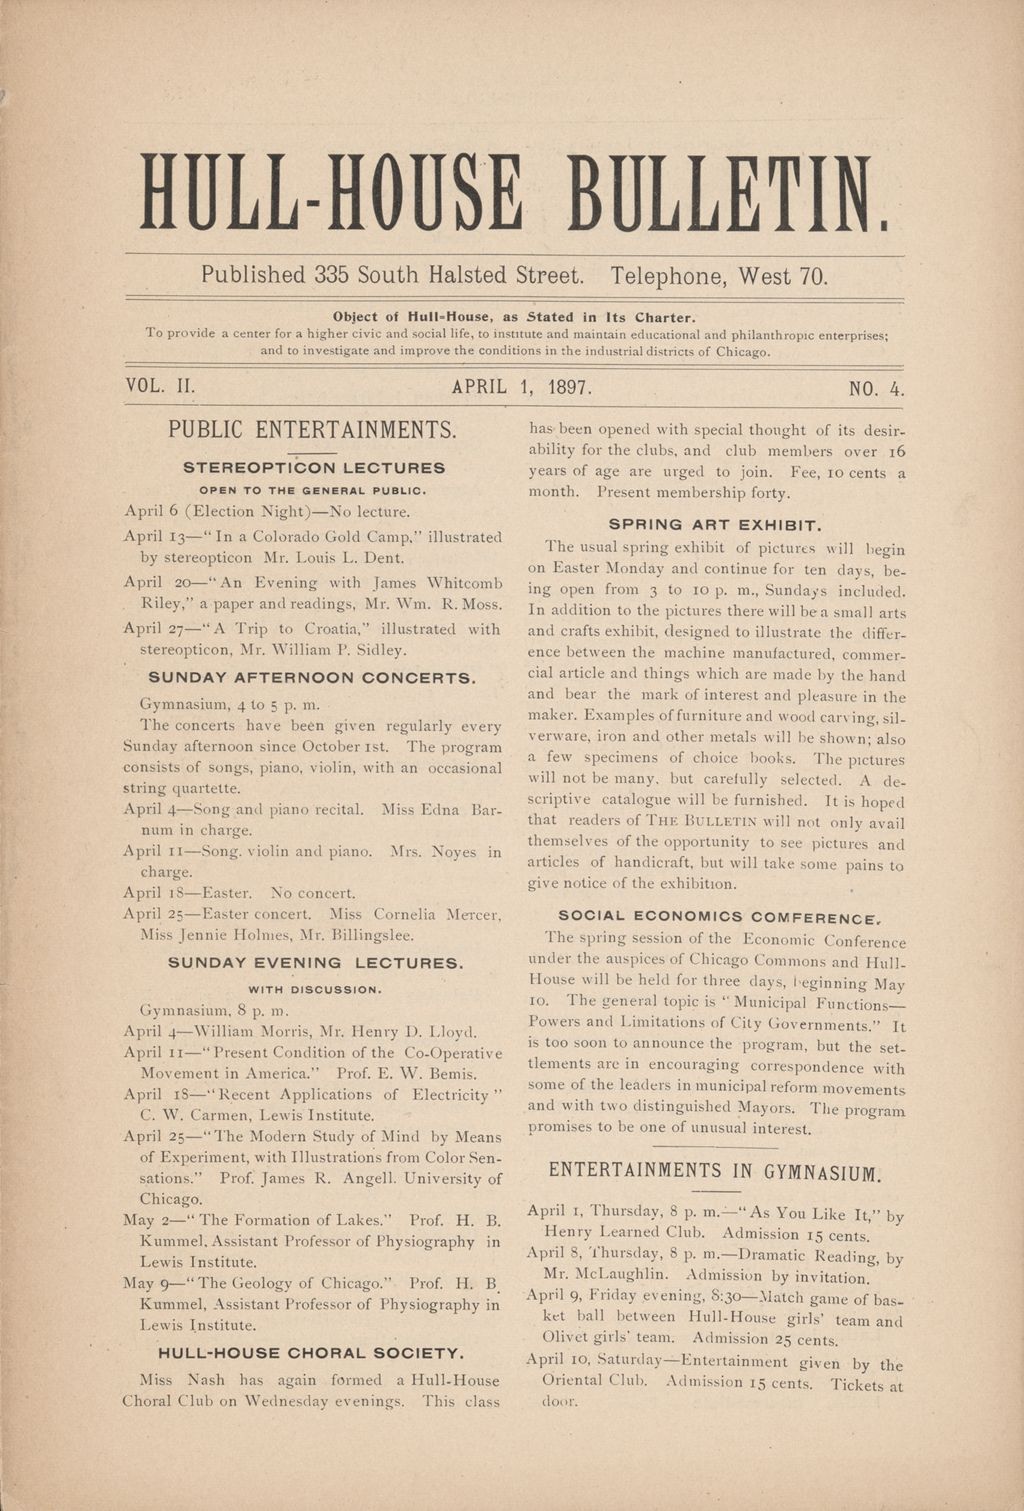 Hull-House Bulletin, vol. 2, no. 4, 1897: Apr. 1